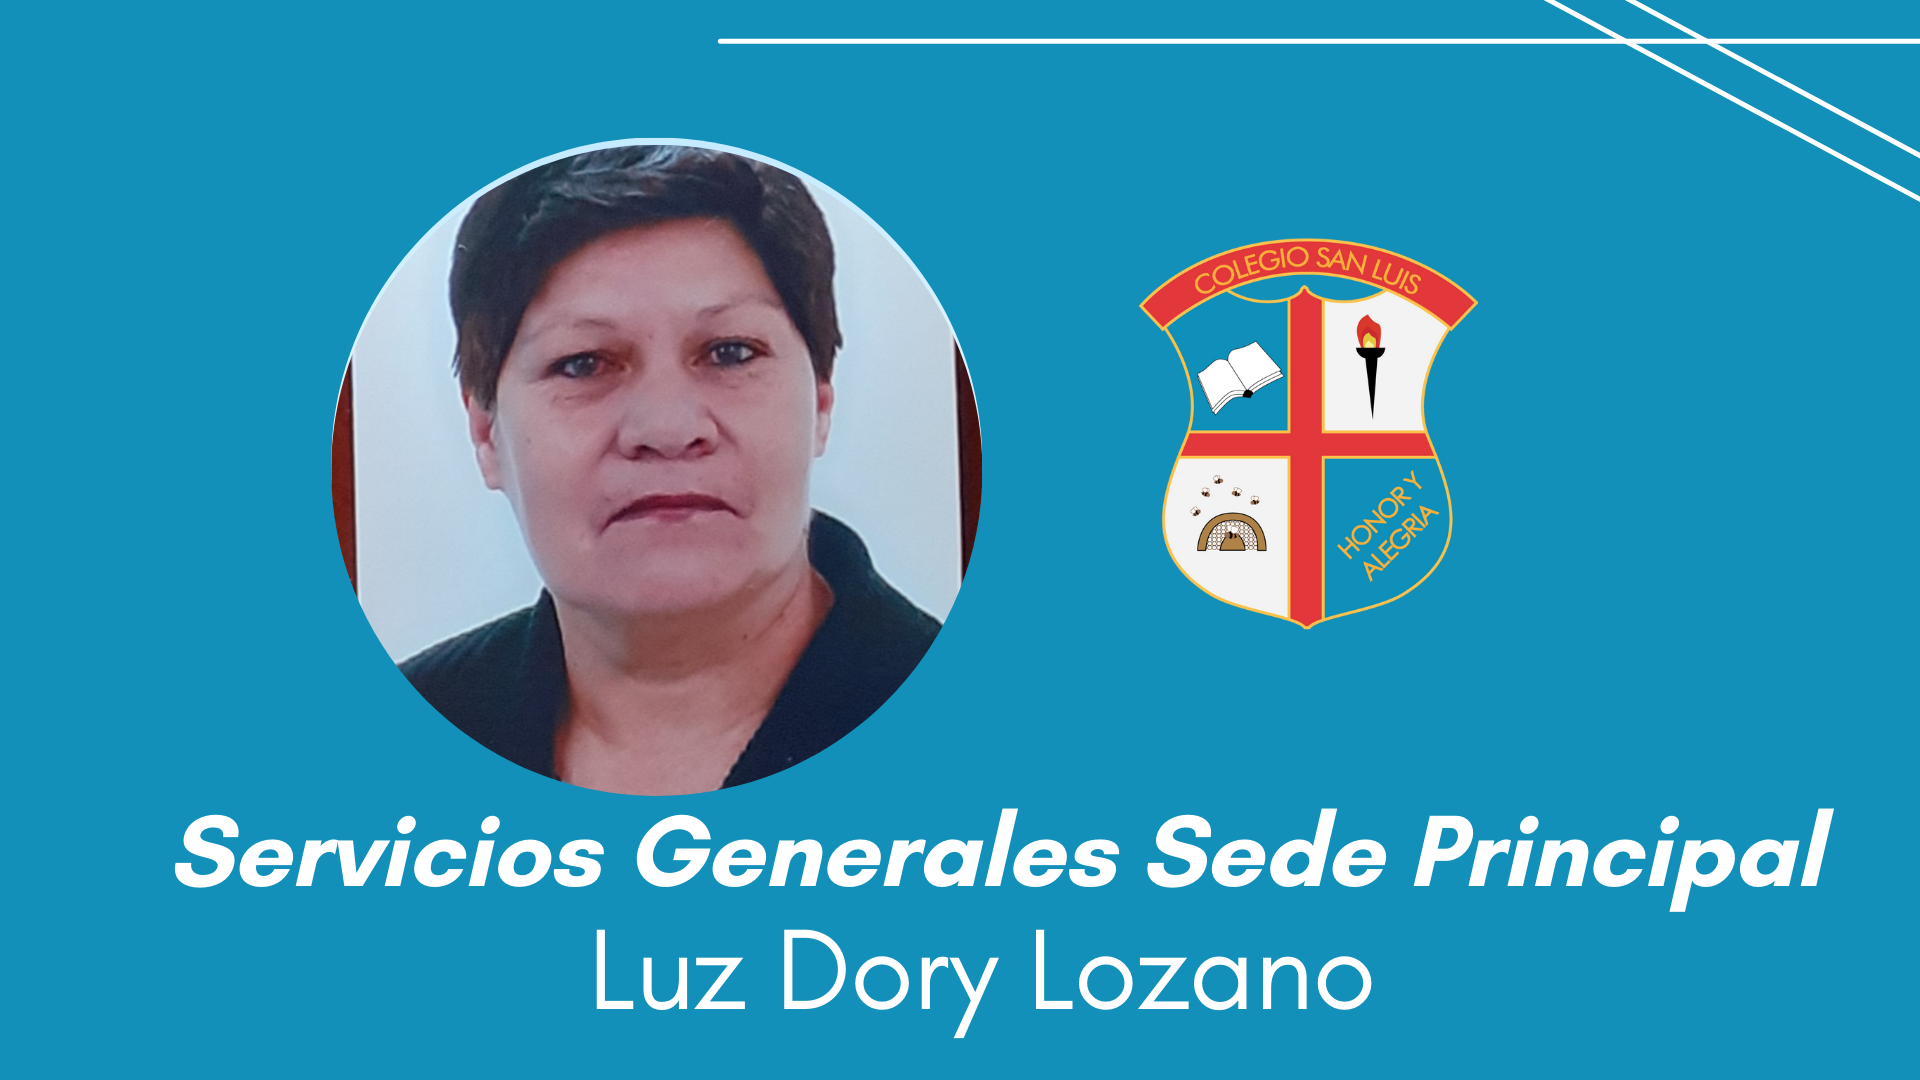 Luz Dory Lozano